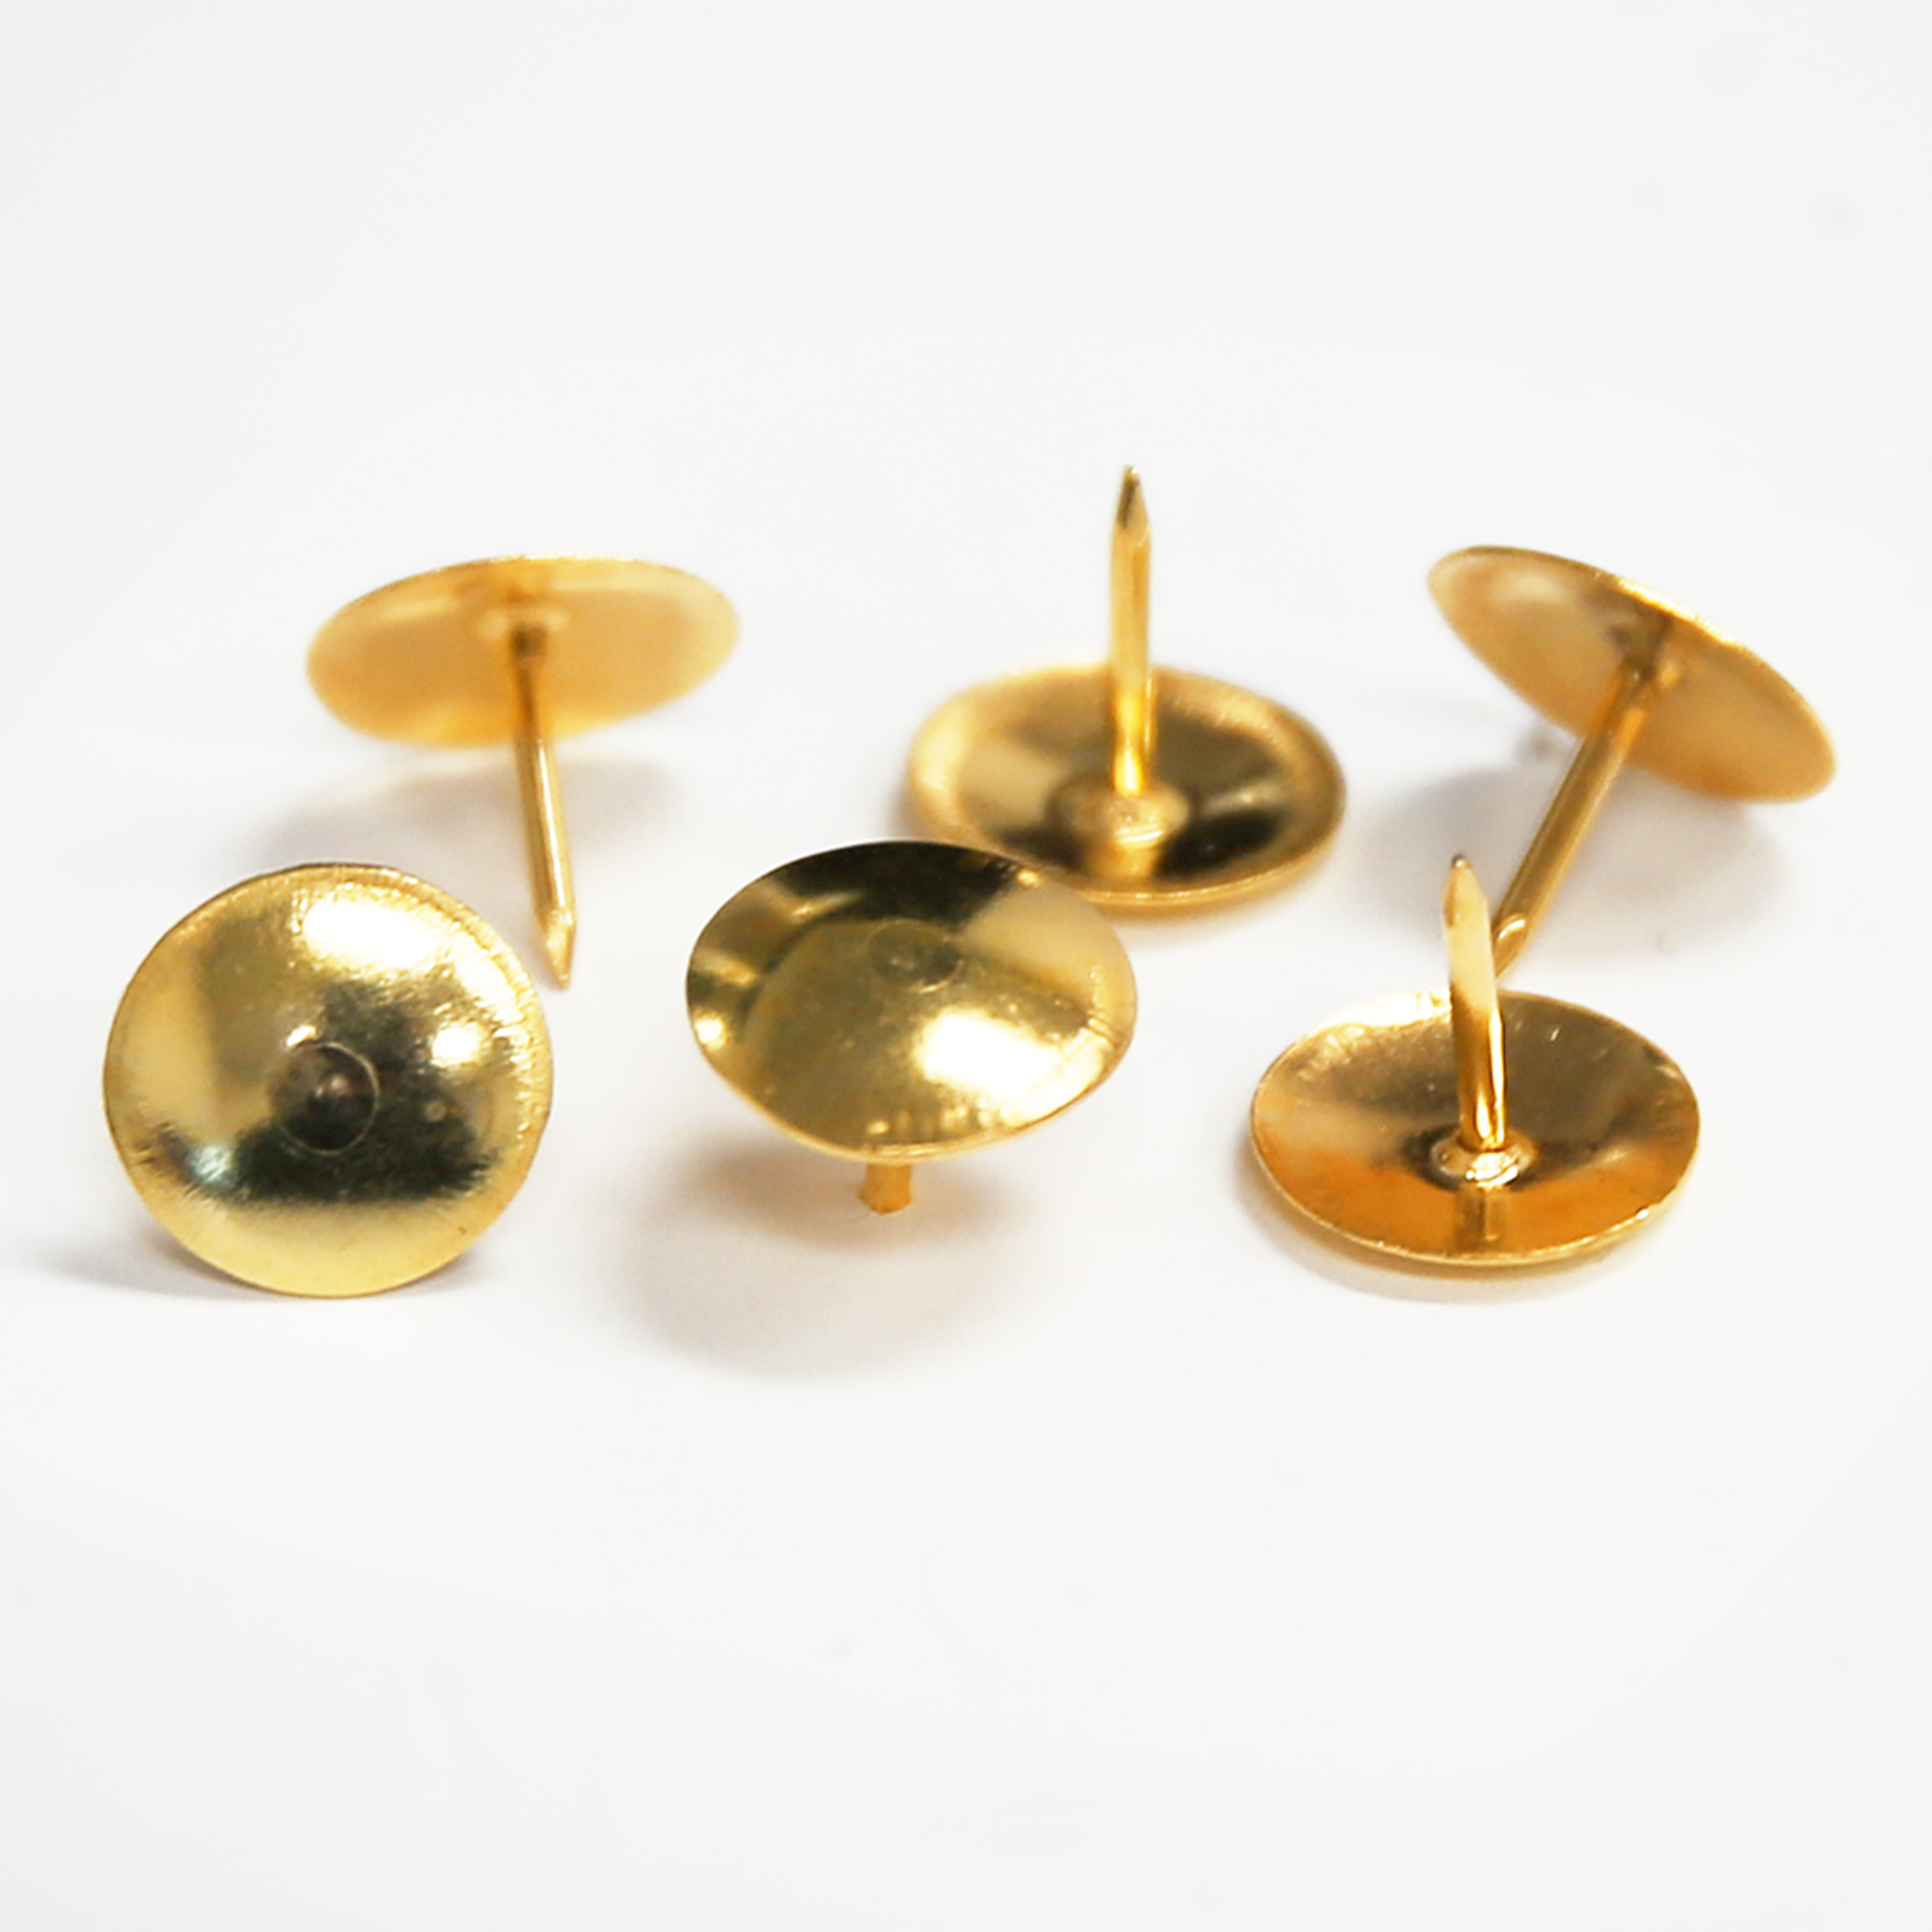 Bazic Brass Thumb Tack, Gold, 200 per Pack, 2 Pack (400 tacks)